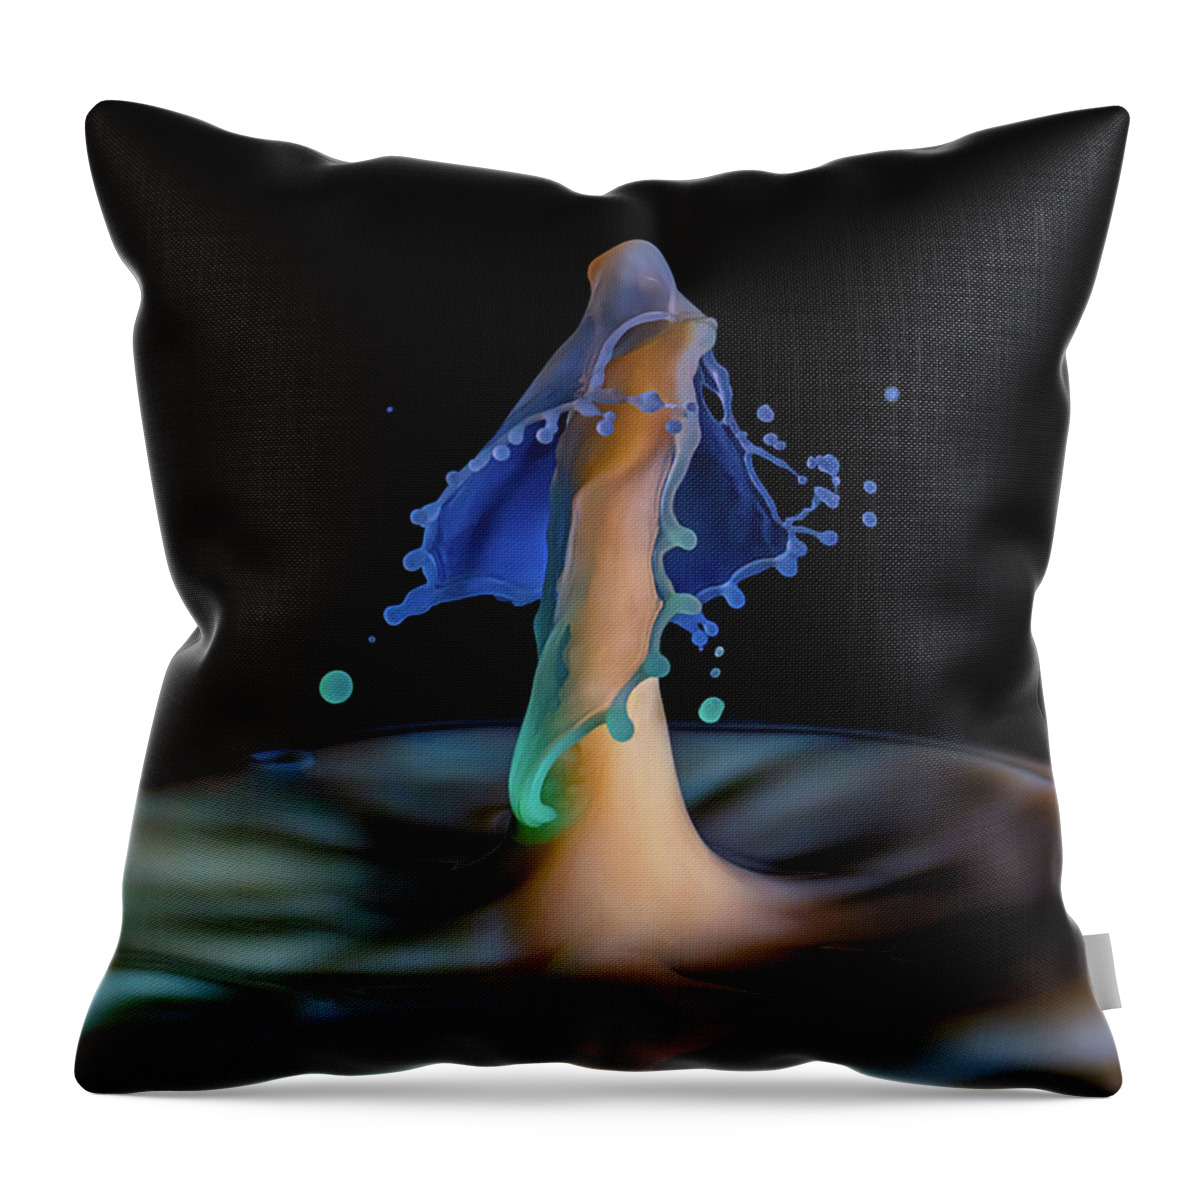 Splash Art Throw Pillow featuring the photograph The Veiled Dancer by Michael McKenney